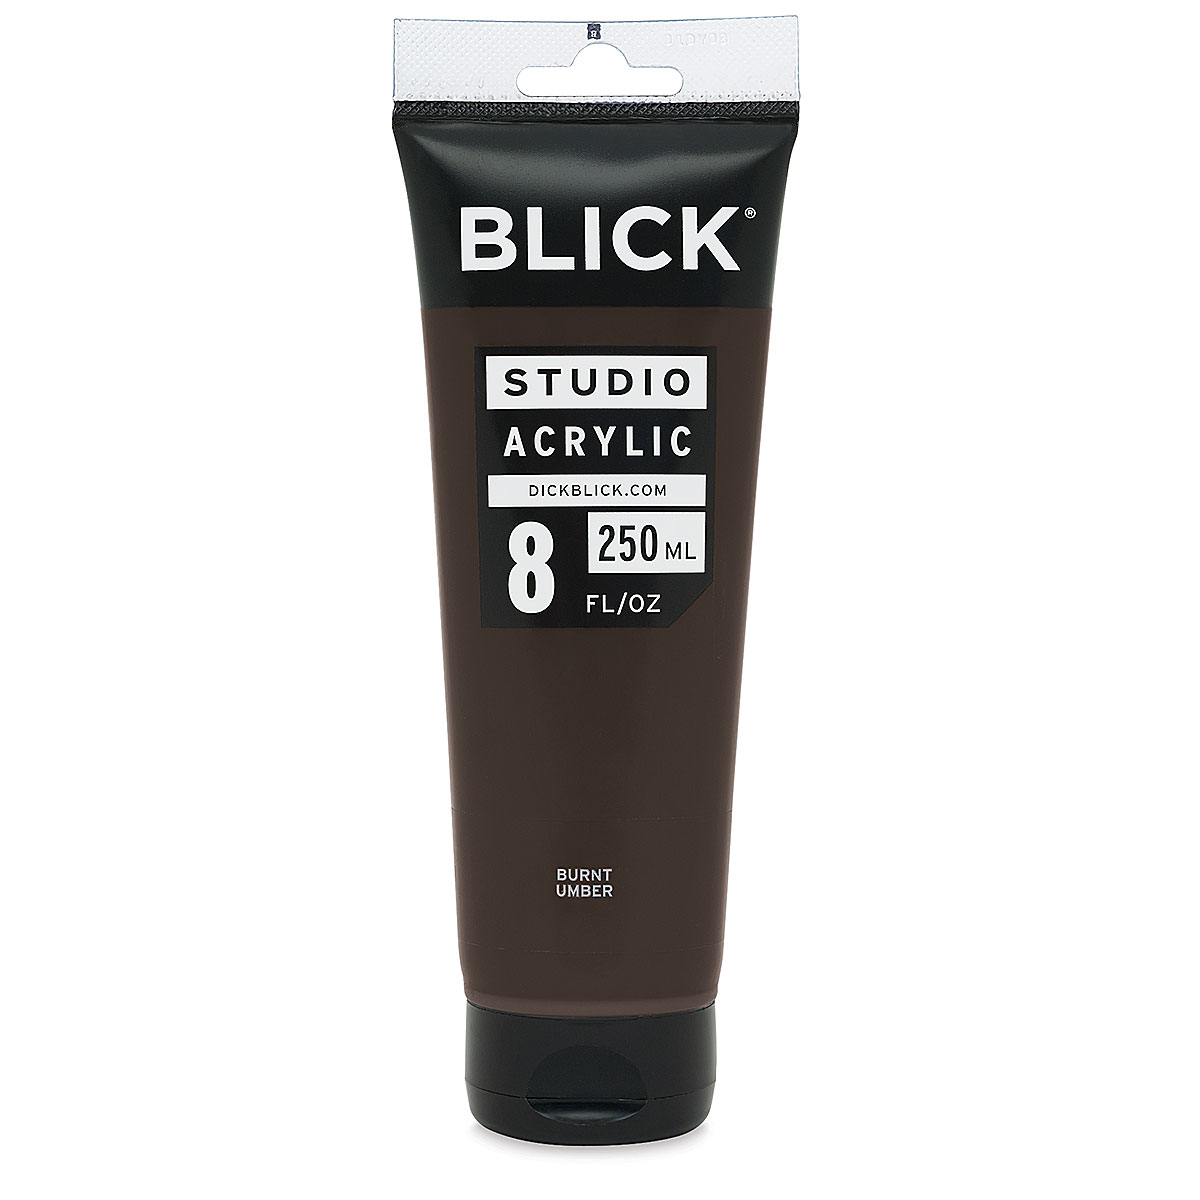 Blick Studio Acrylics - Burnt Umber, 8 oz tube